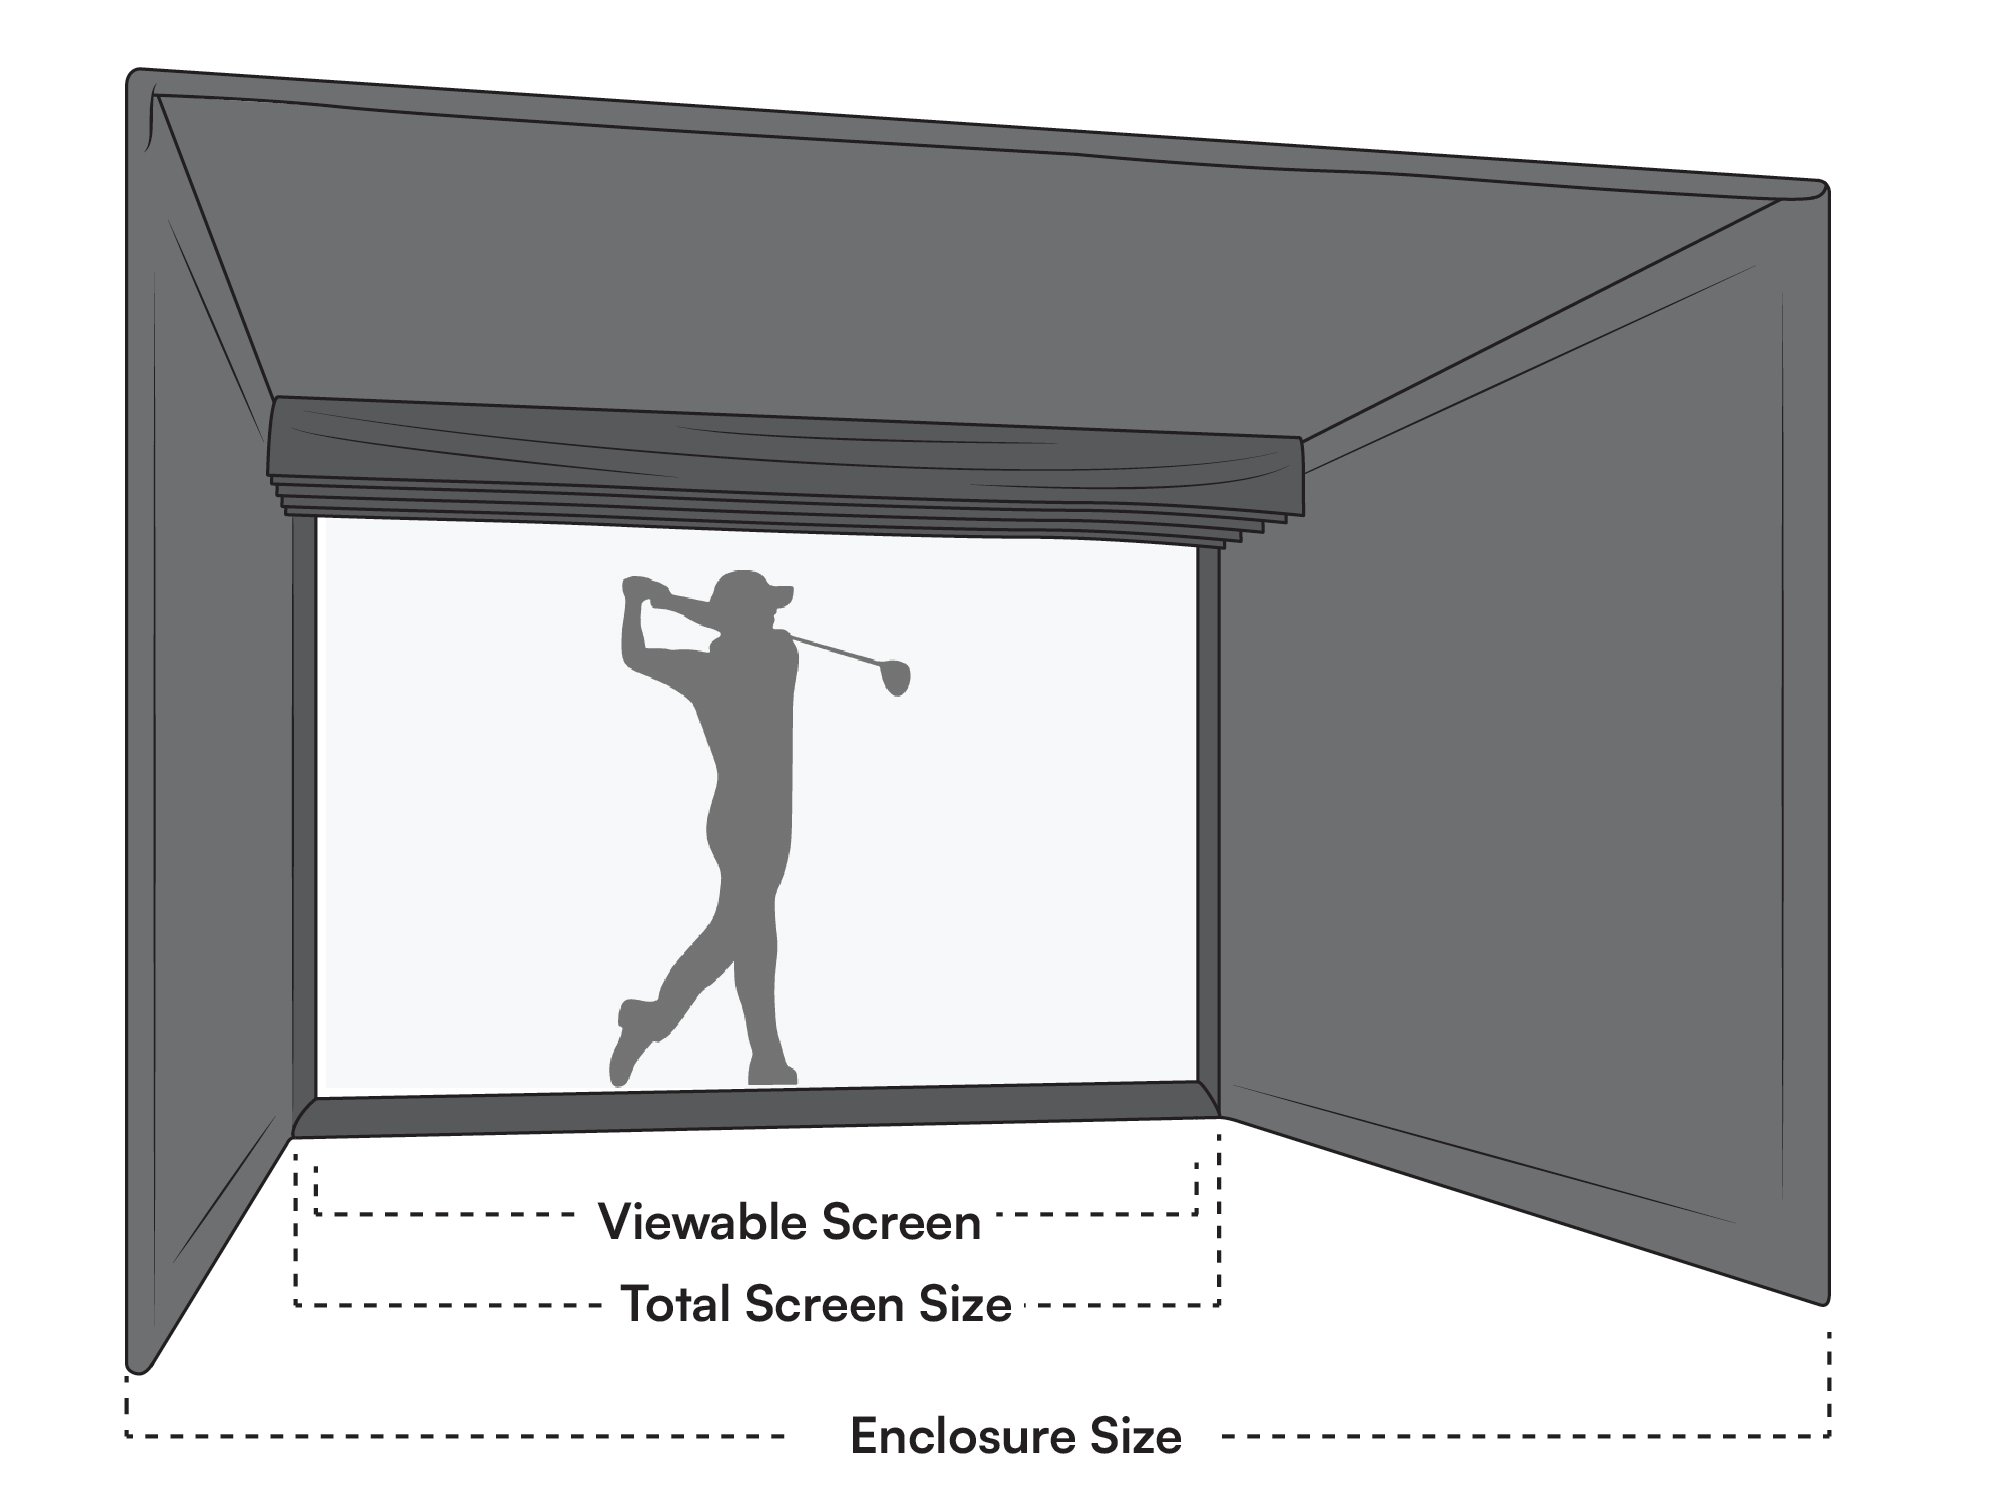 Golf enclosure dimensions - viewable screen, total screen and enclosure size